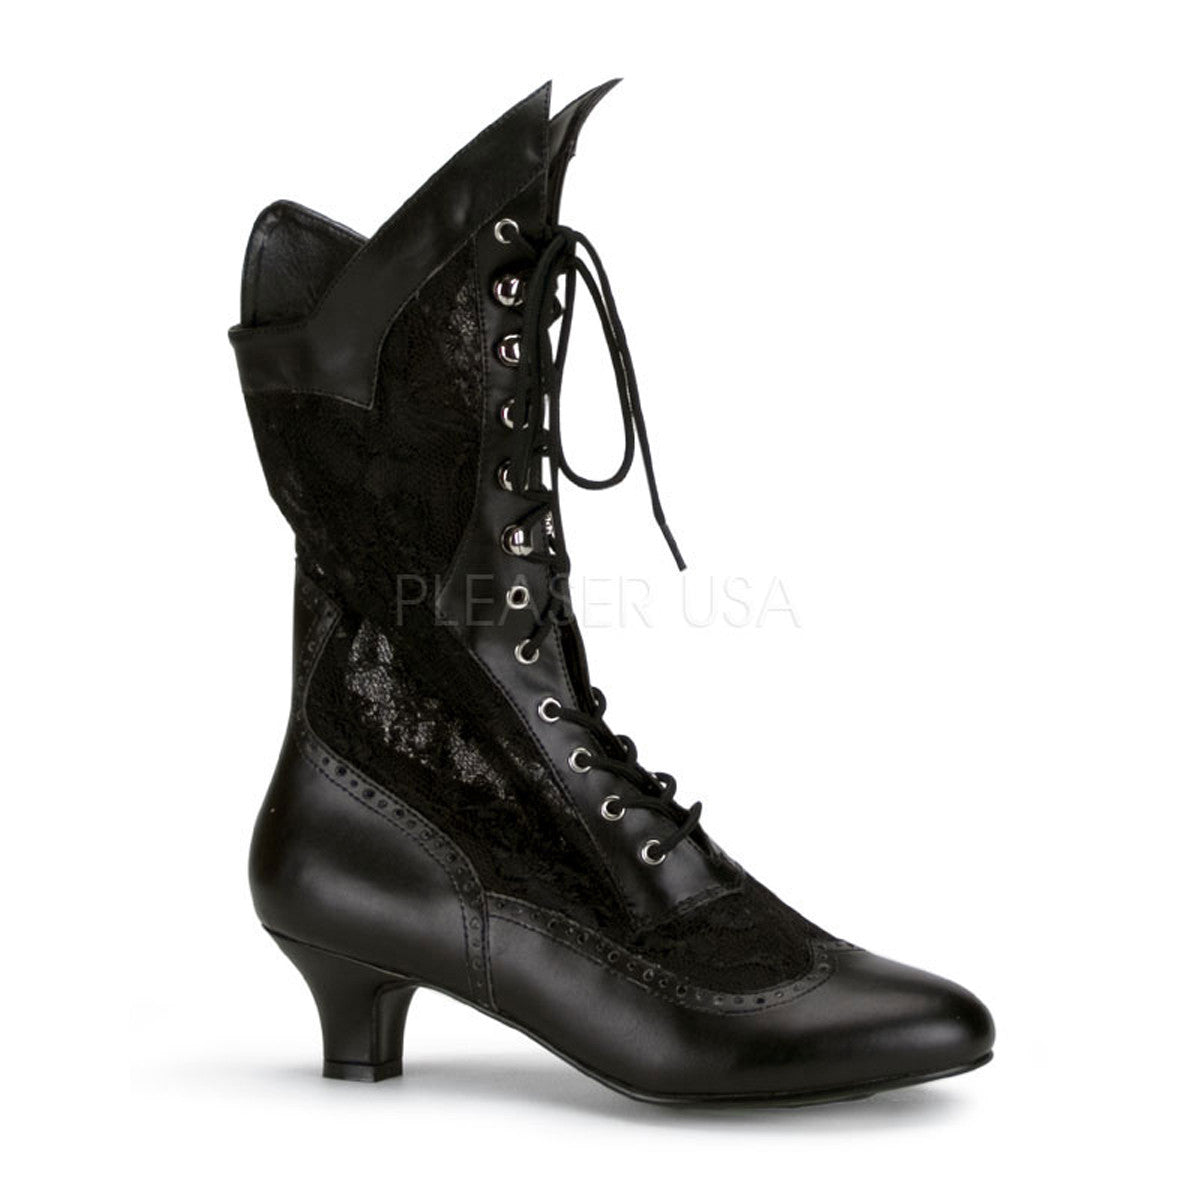 FUNTASMA DAME-115 Black Pu-Lace Ankle Boots - Shoecup.com